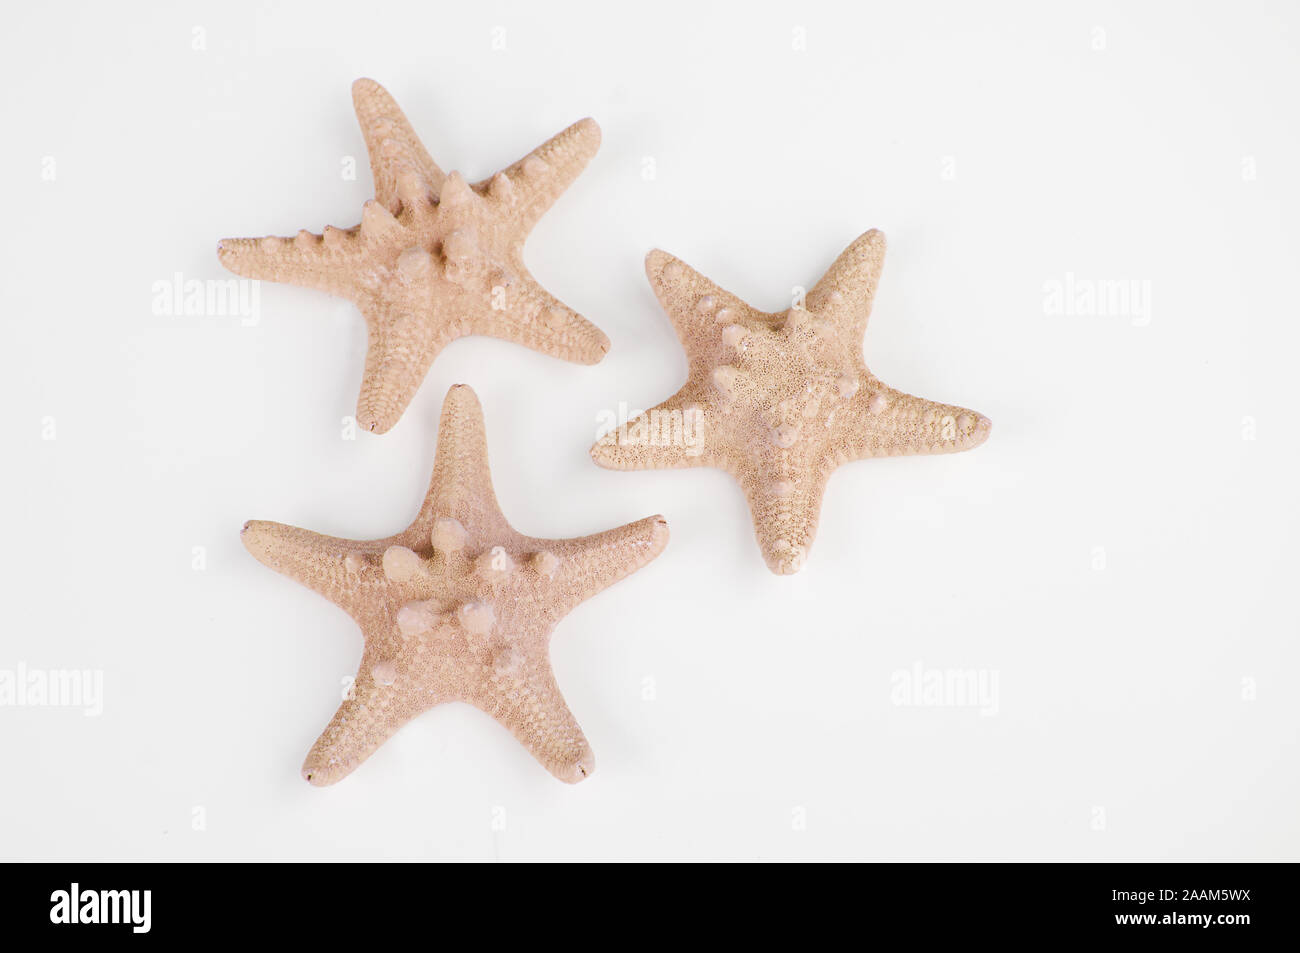 Three peach sand colored starfish isolated on a light background.  Cute shells for coastal theme and beach decor still life. Stock Photo